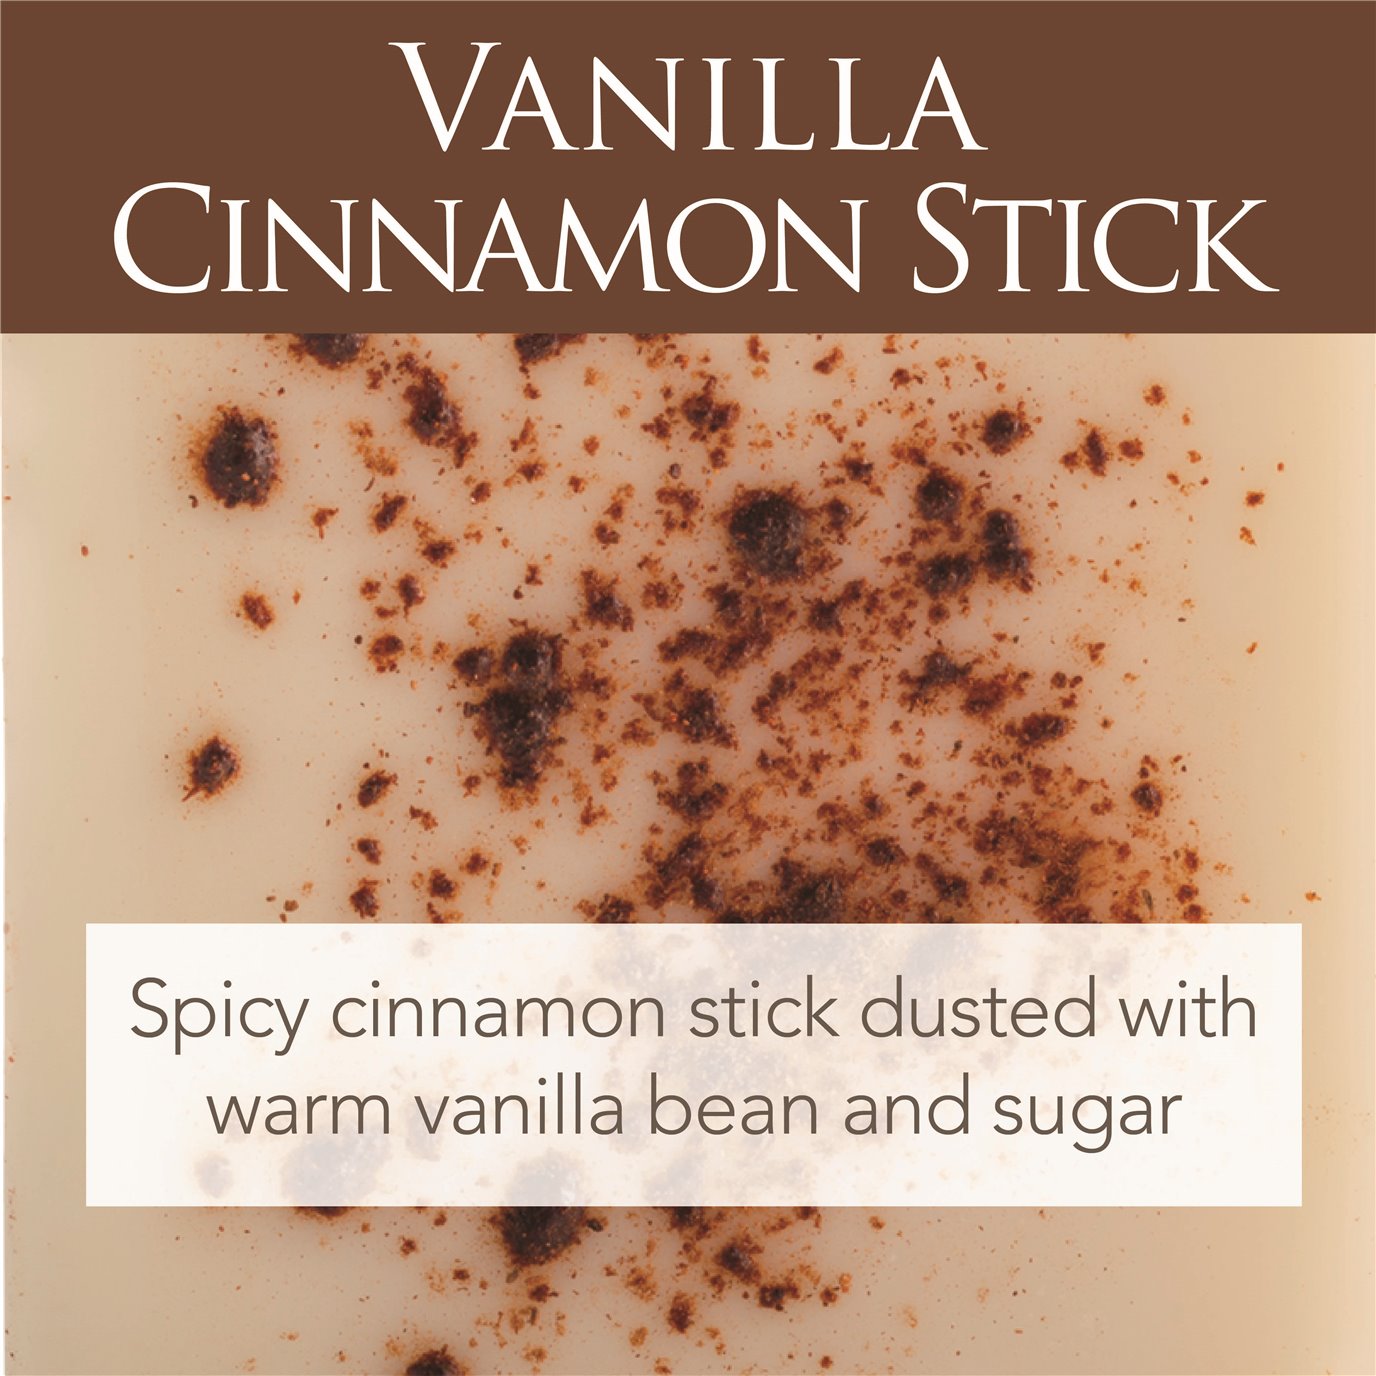 Vanilla Cinnamon Scented Artisan Wax Melt, 2.5oz